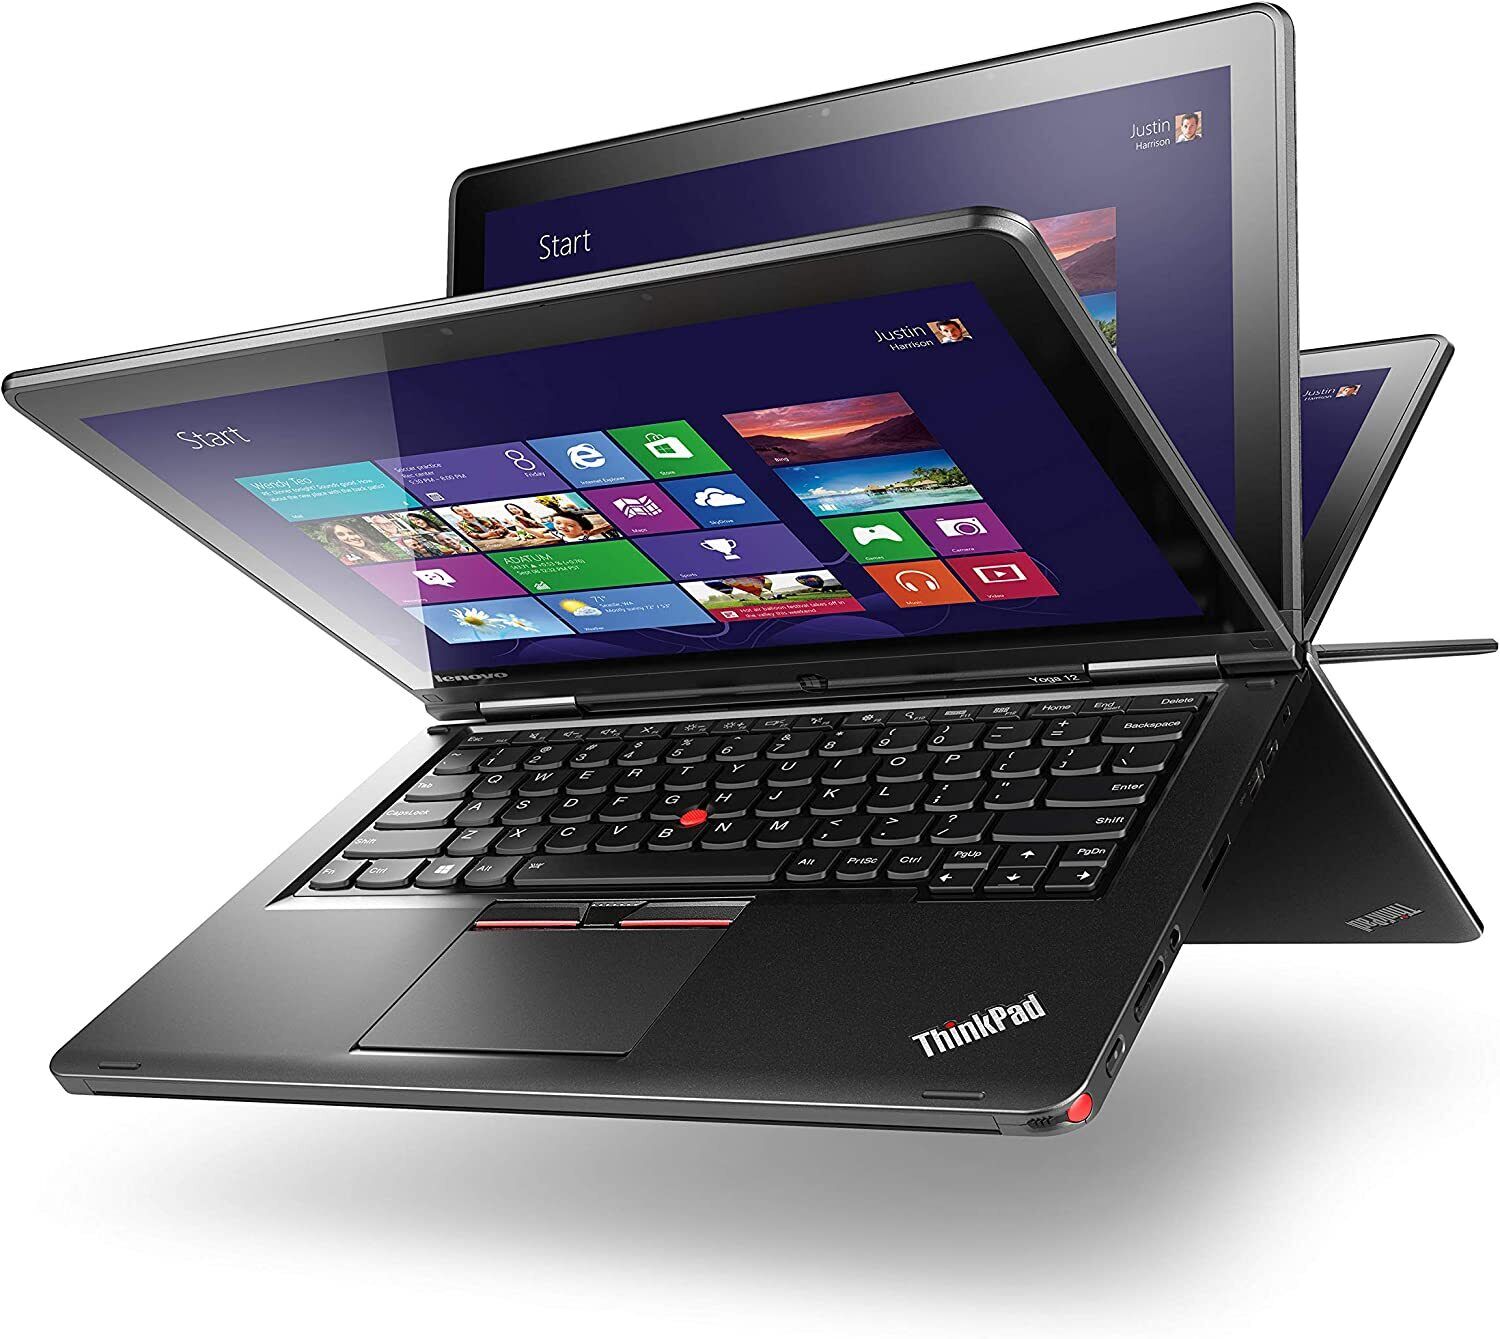 Lenovo Thinkpad Yoga 12 Laptop Core i5 4GB RAM 128GB SSD Window 10 Warranty